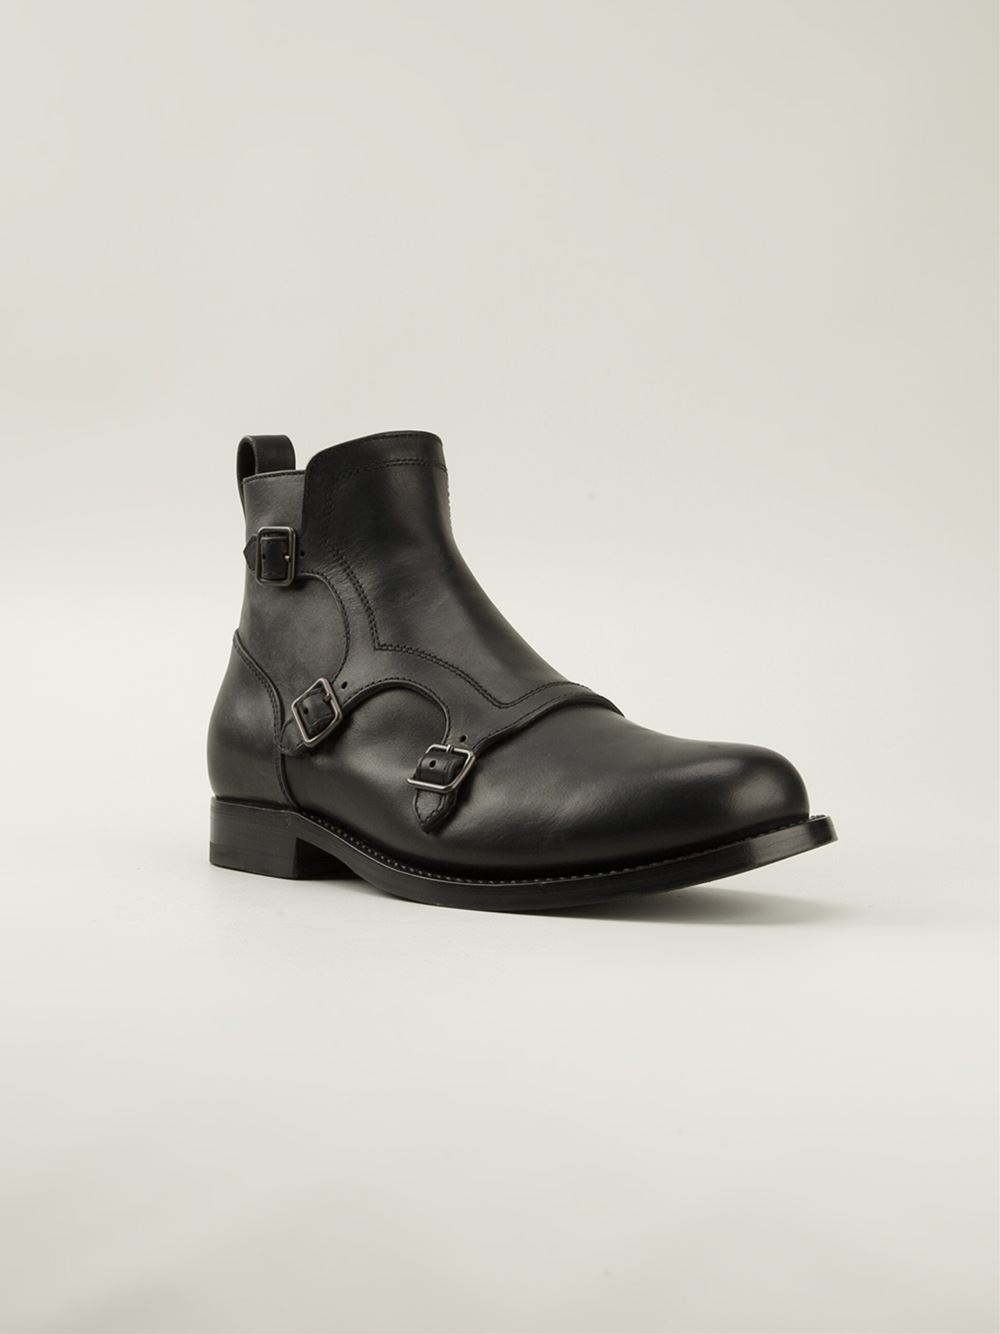 Bottega Veneta Side-Clasp Leather Ankle Boots in Black for Men - Lyst